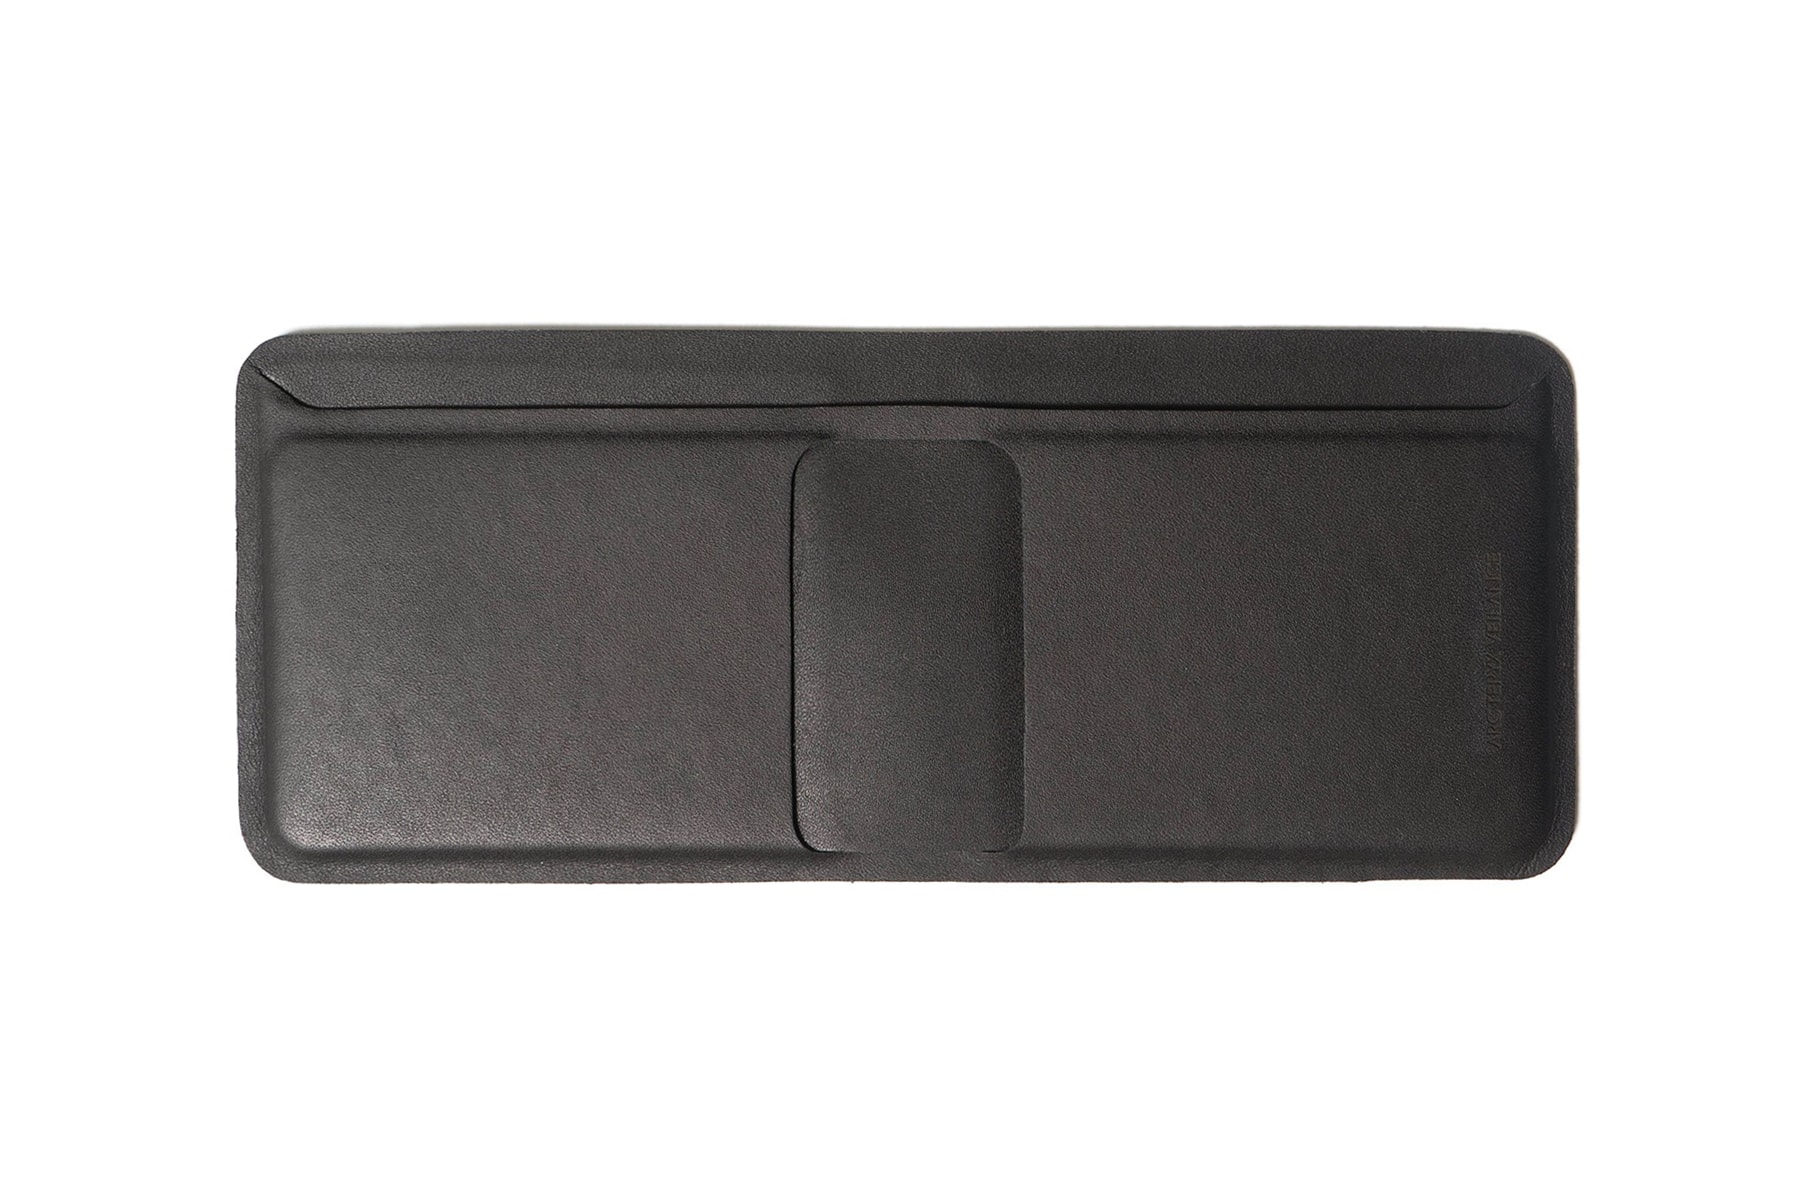 Arc’teryx Veilance Engineered Leather Accessories Spring Summer 2018 Casing Card Wallet Black Billfold 78mm 89mm Passport Wallet